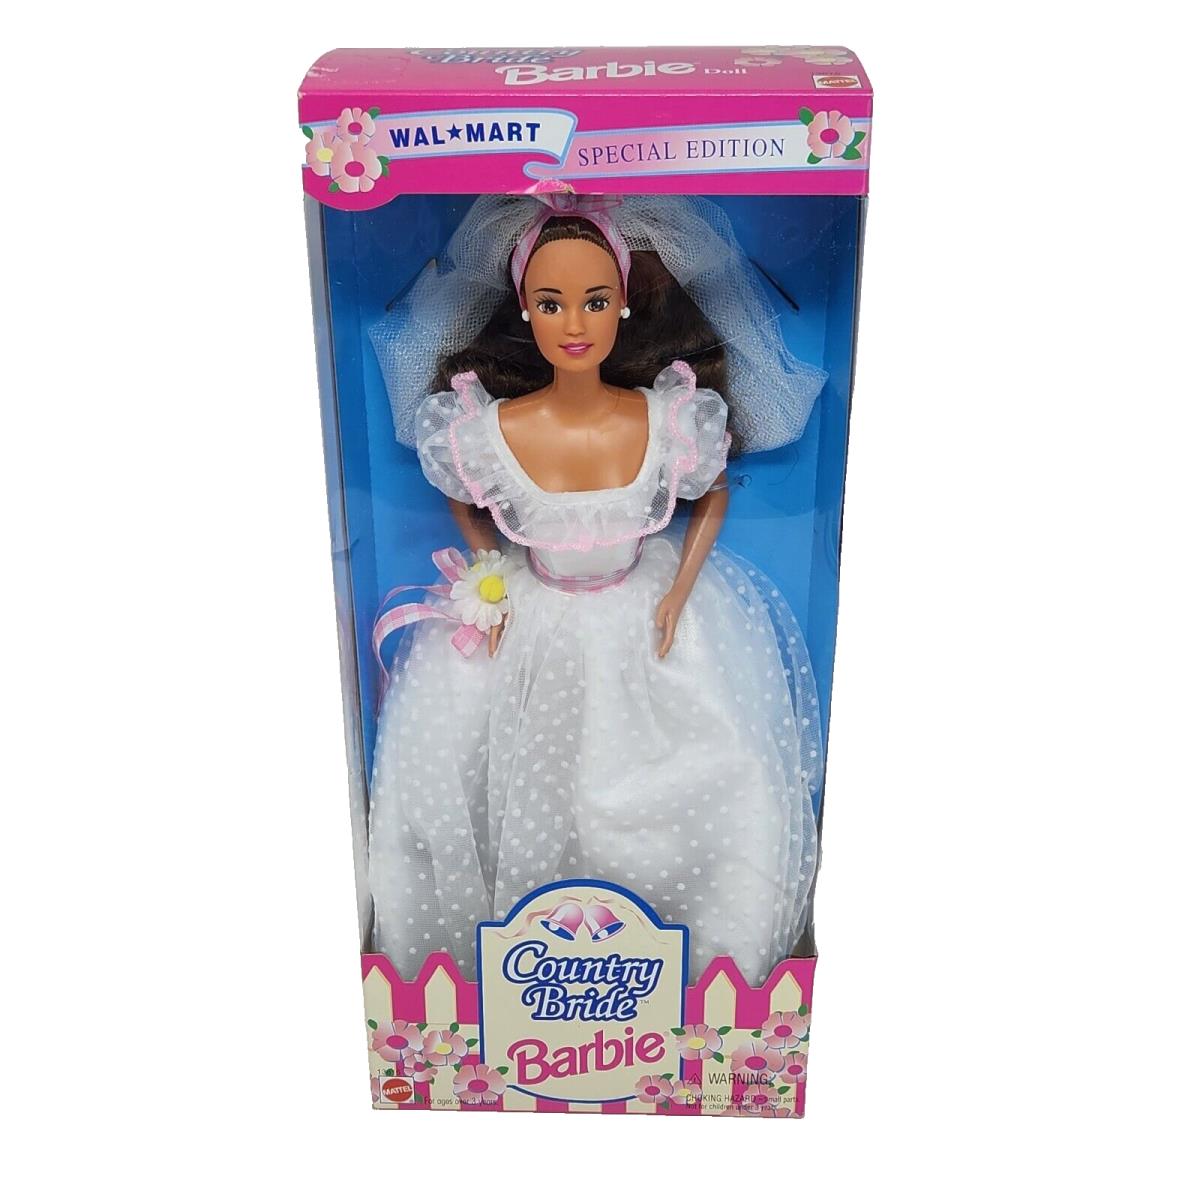 Vintage 1994 Country Bride Barbie Doll Mattel 13616 IN Box